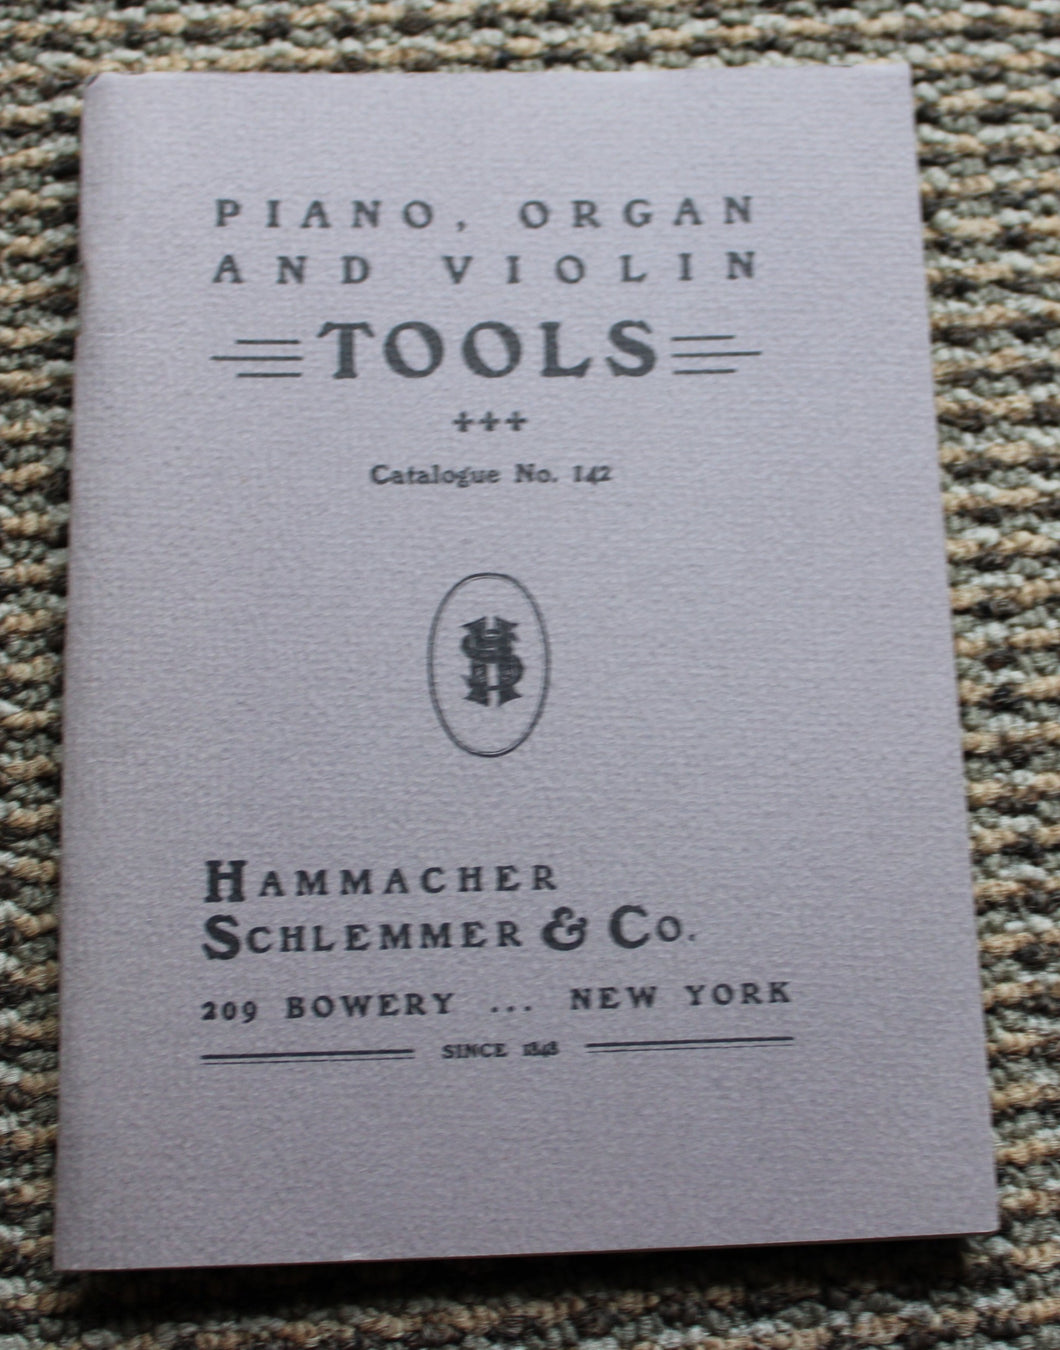 Piano, Organ and Violin Tools Catalogue No 142 Hammacher Schlemmer & Co.